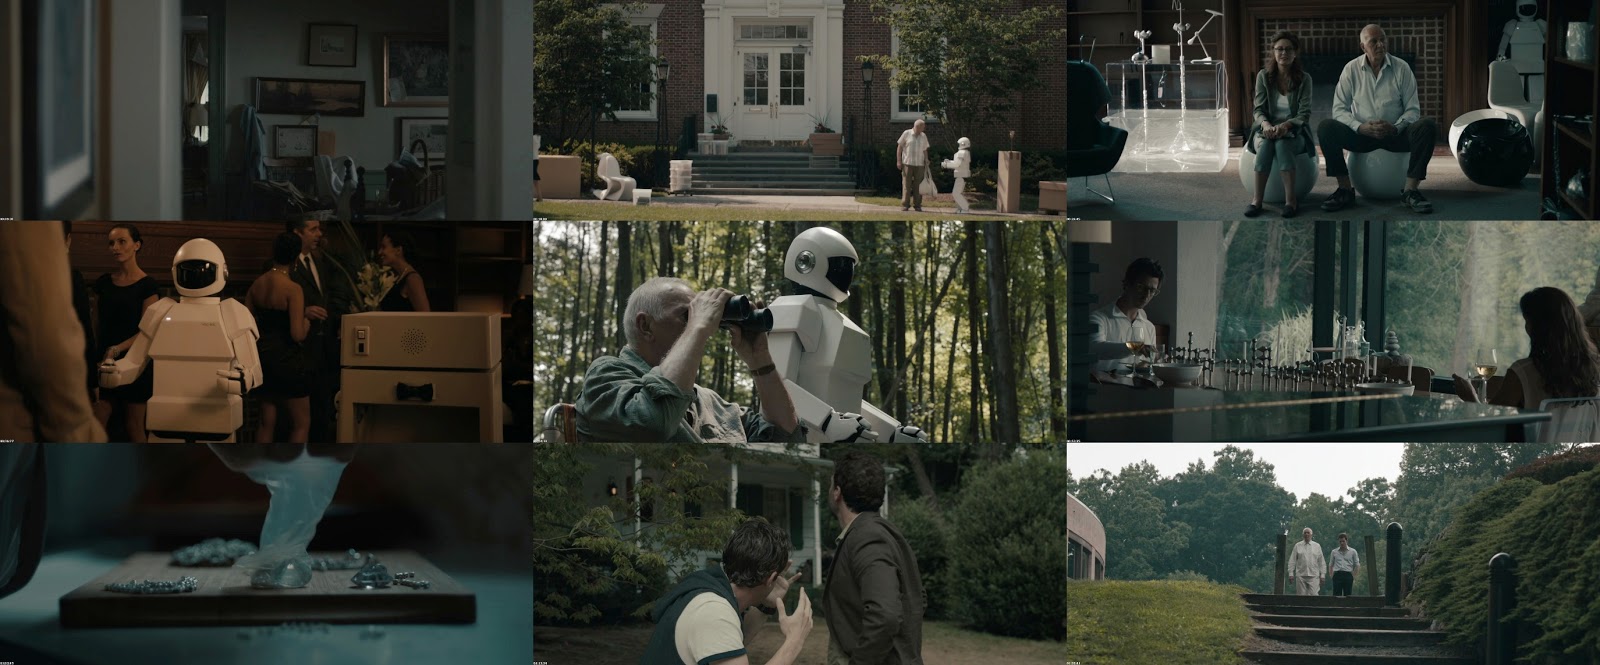 Robot & Frank (2012) BluRay 1080p 5.1CH x264 1,1GB Robot+&+Frank+%282012%29+BluRay+1080p+5.1CH+x264+1,1GB+hnmovies